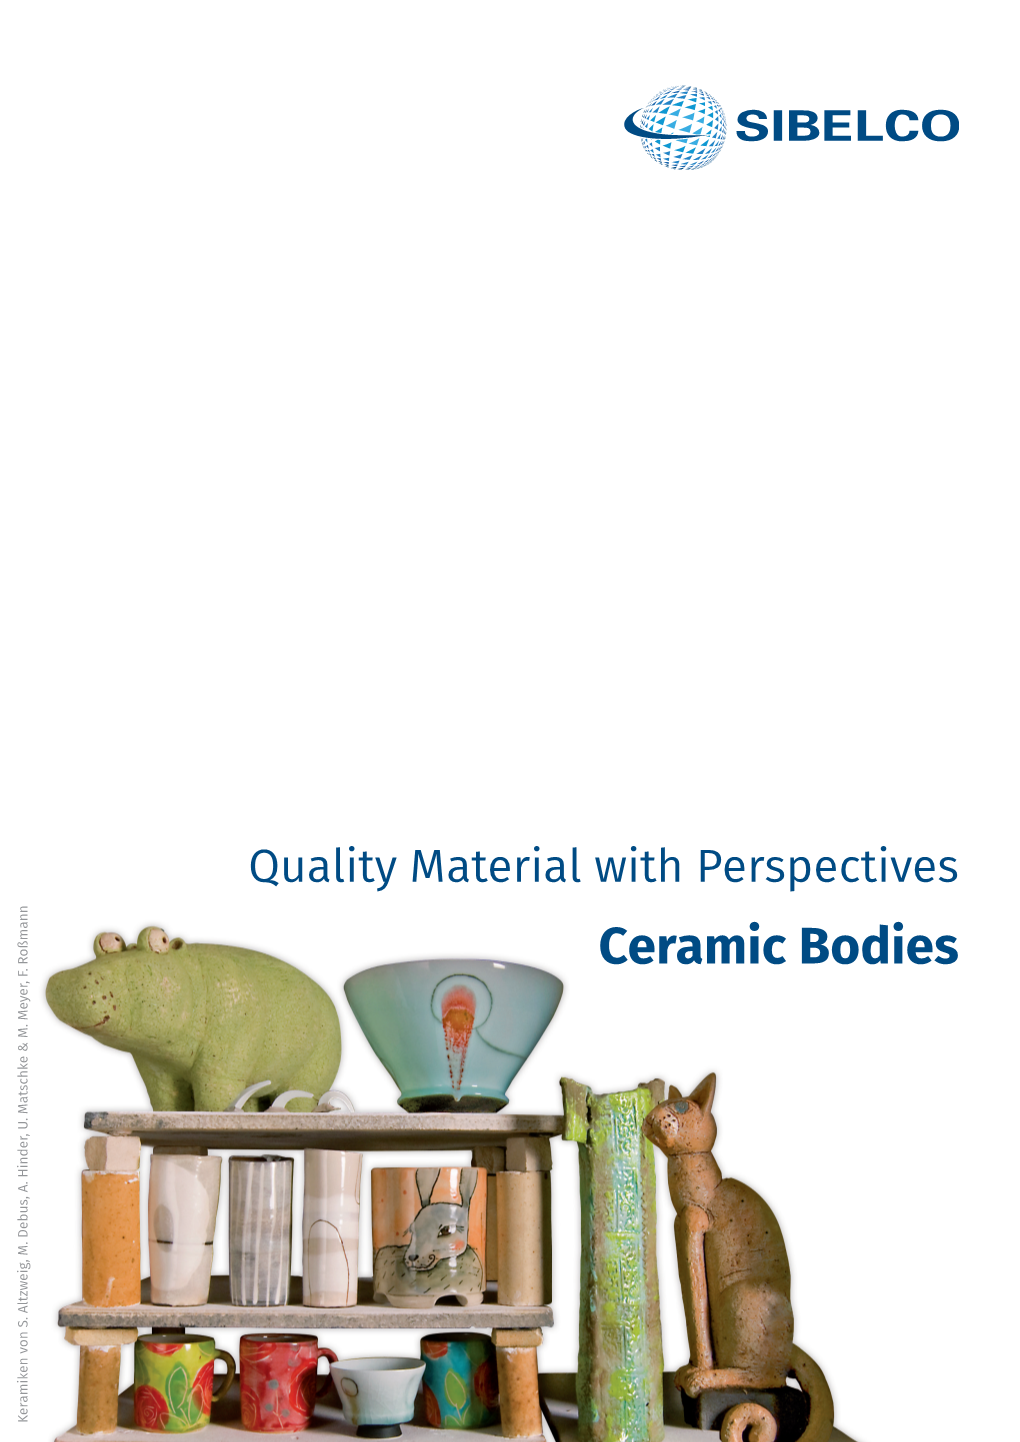 Sibelco Ceramic Bodies Product Range